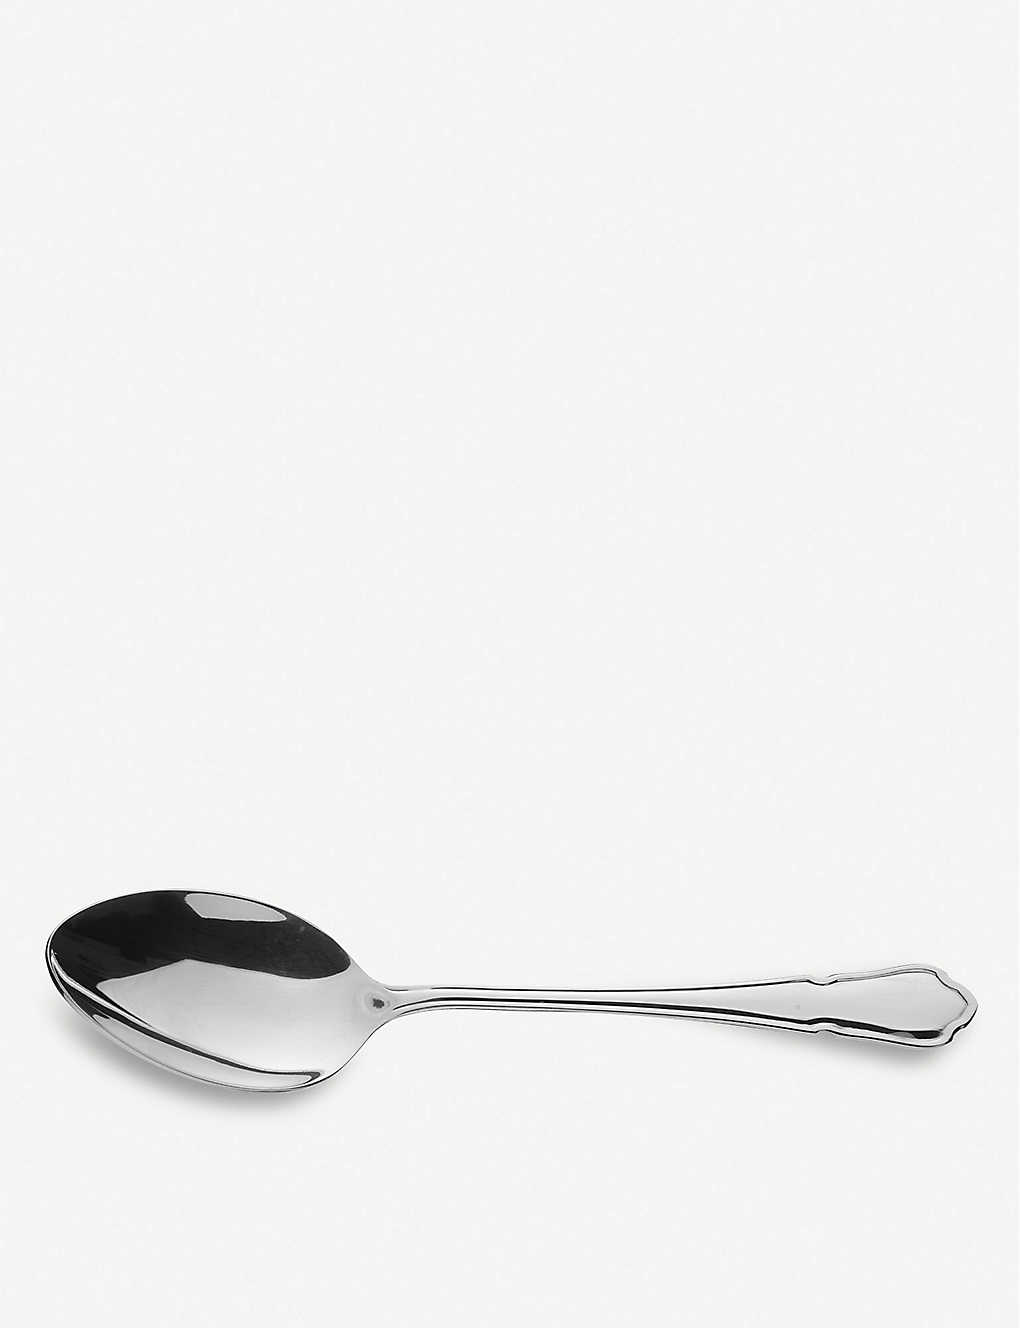 ARTHUR PRICE デュバリー ステンレススチール サービング スプーン 4個セット Dubarry stainless steel serving spoons set of four #STEEL